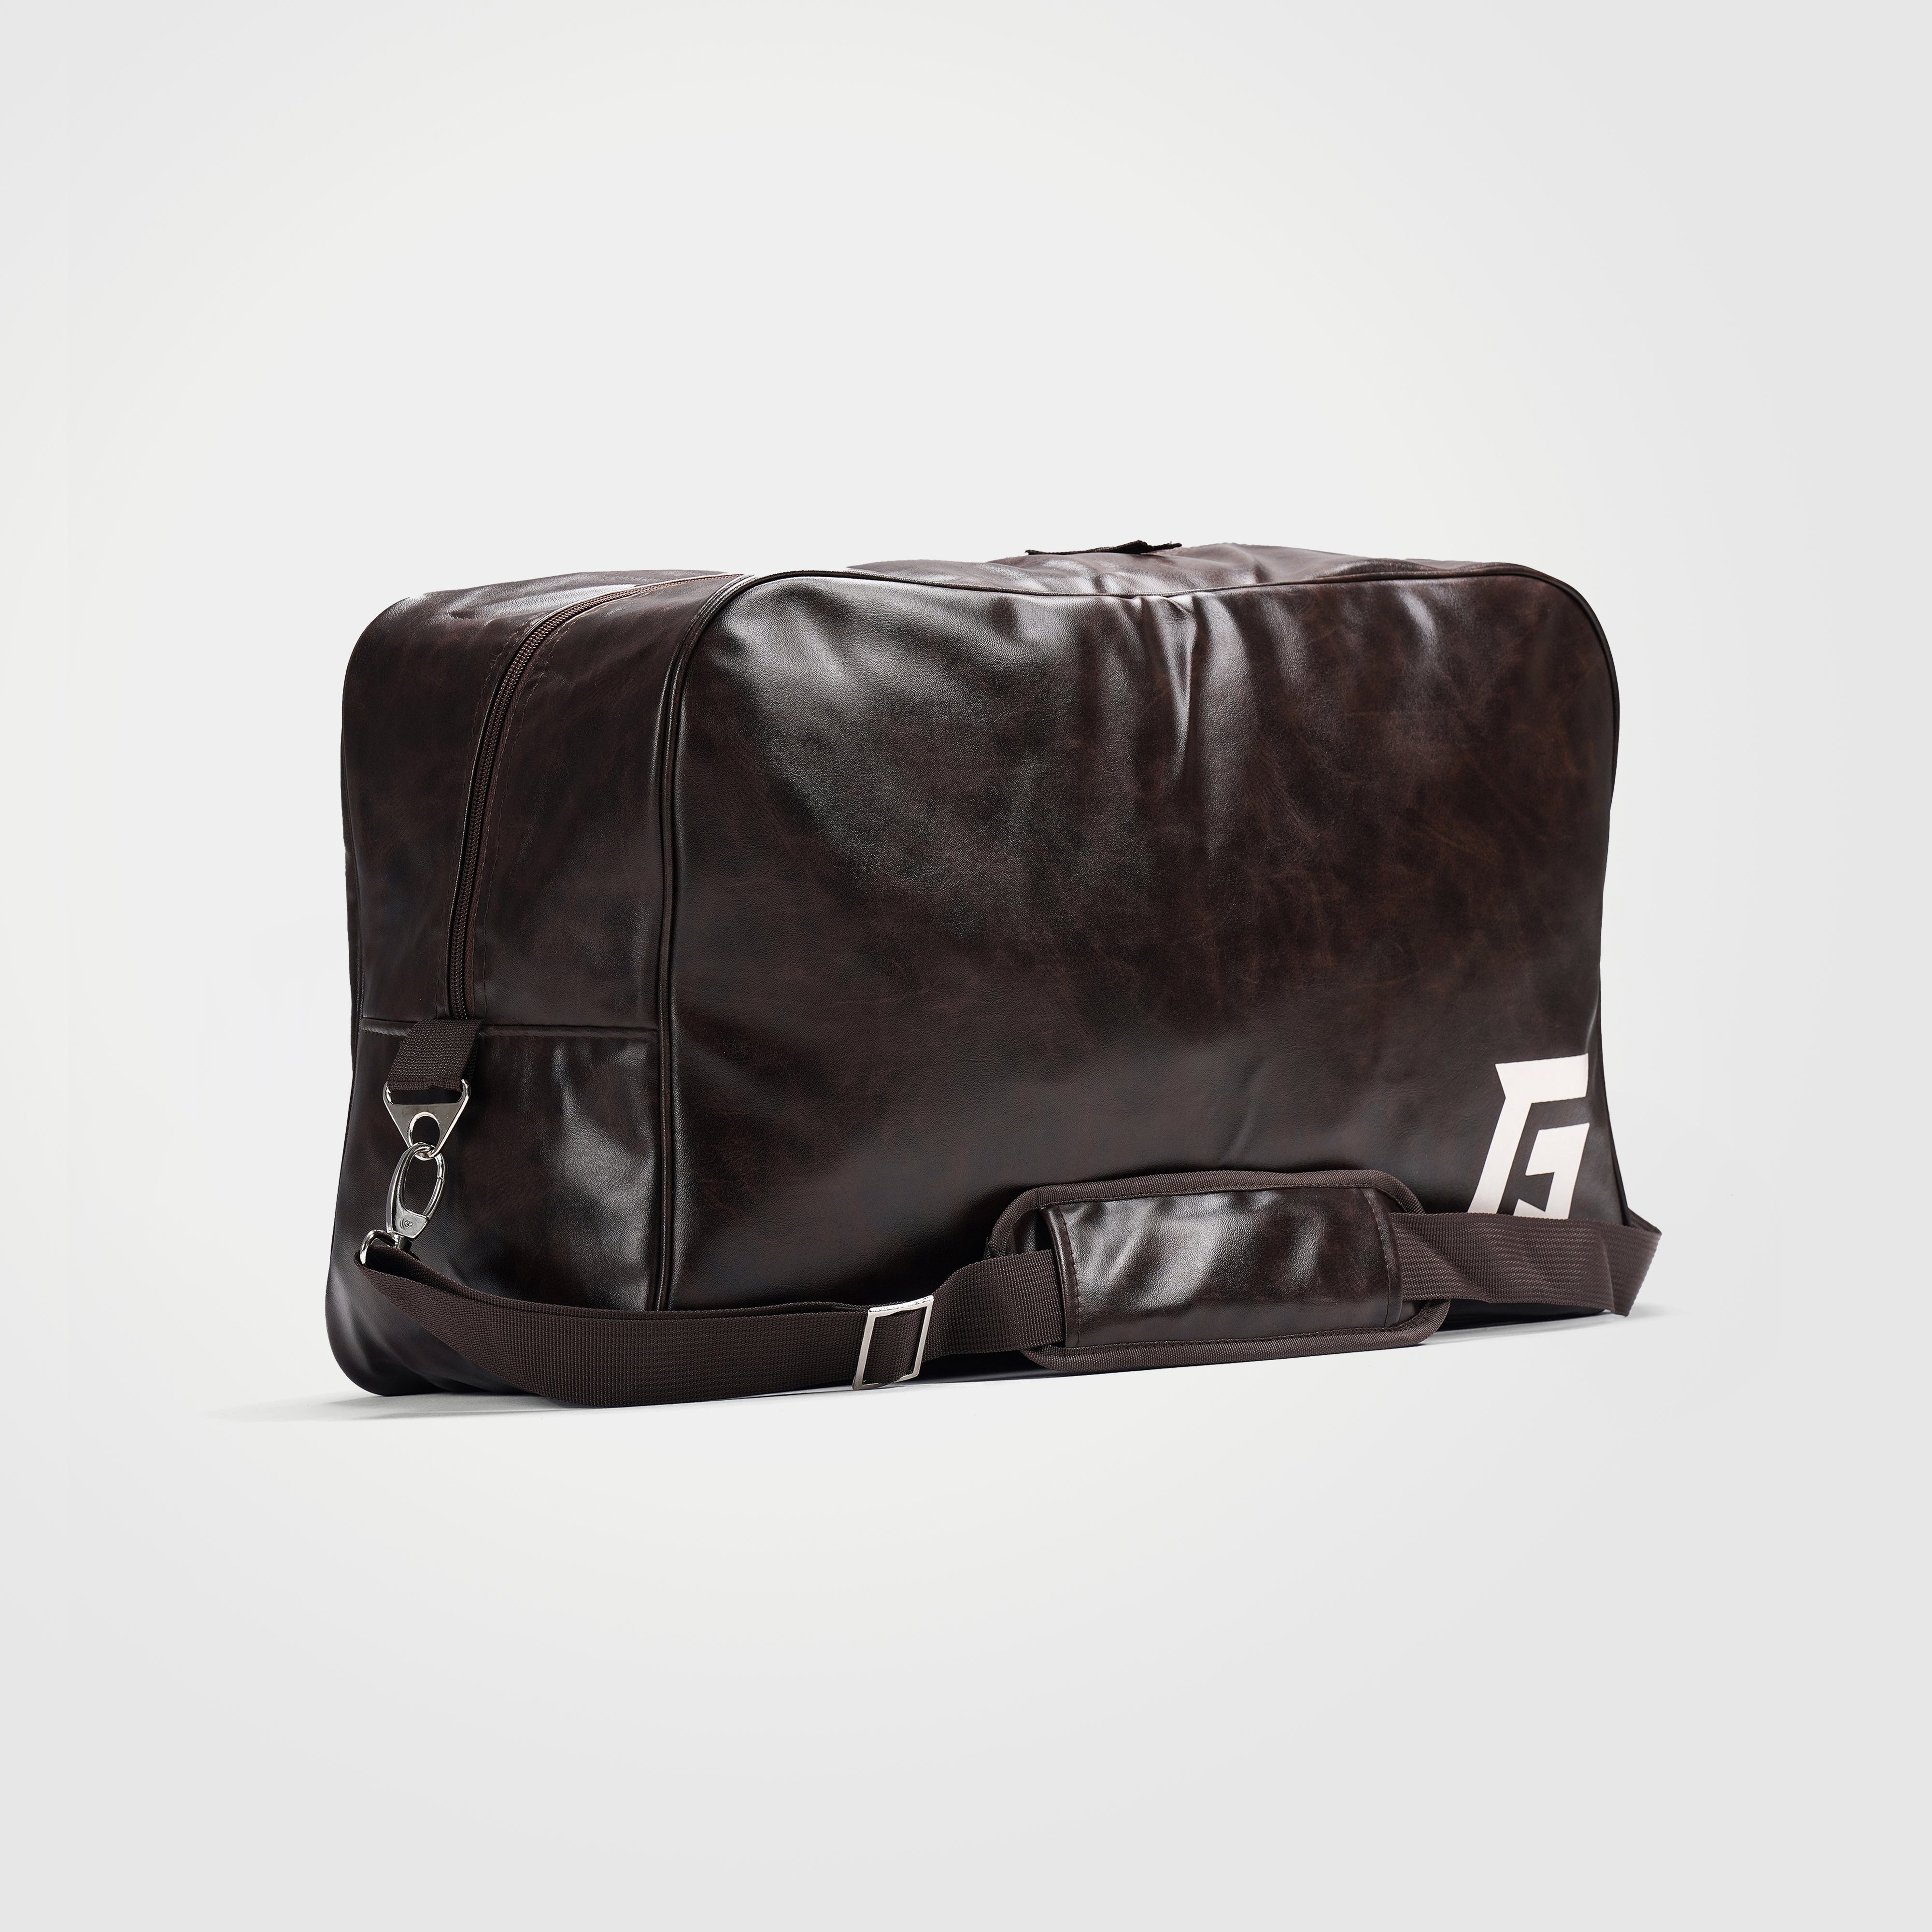 Athletic-Inspired Bag (Brown)